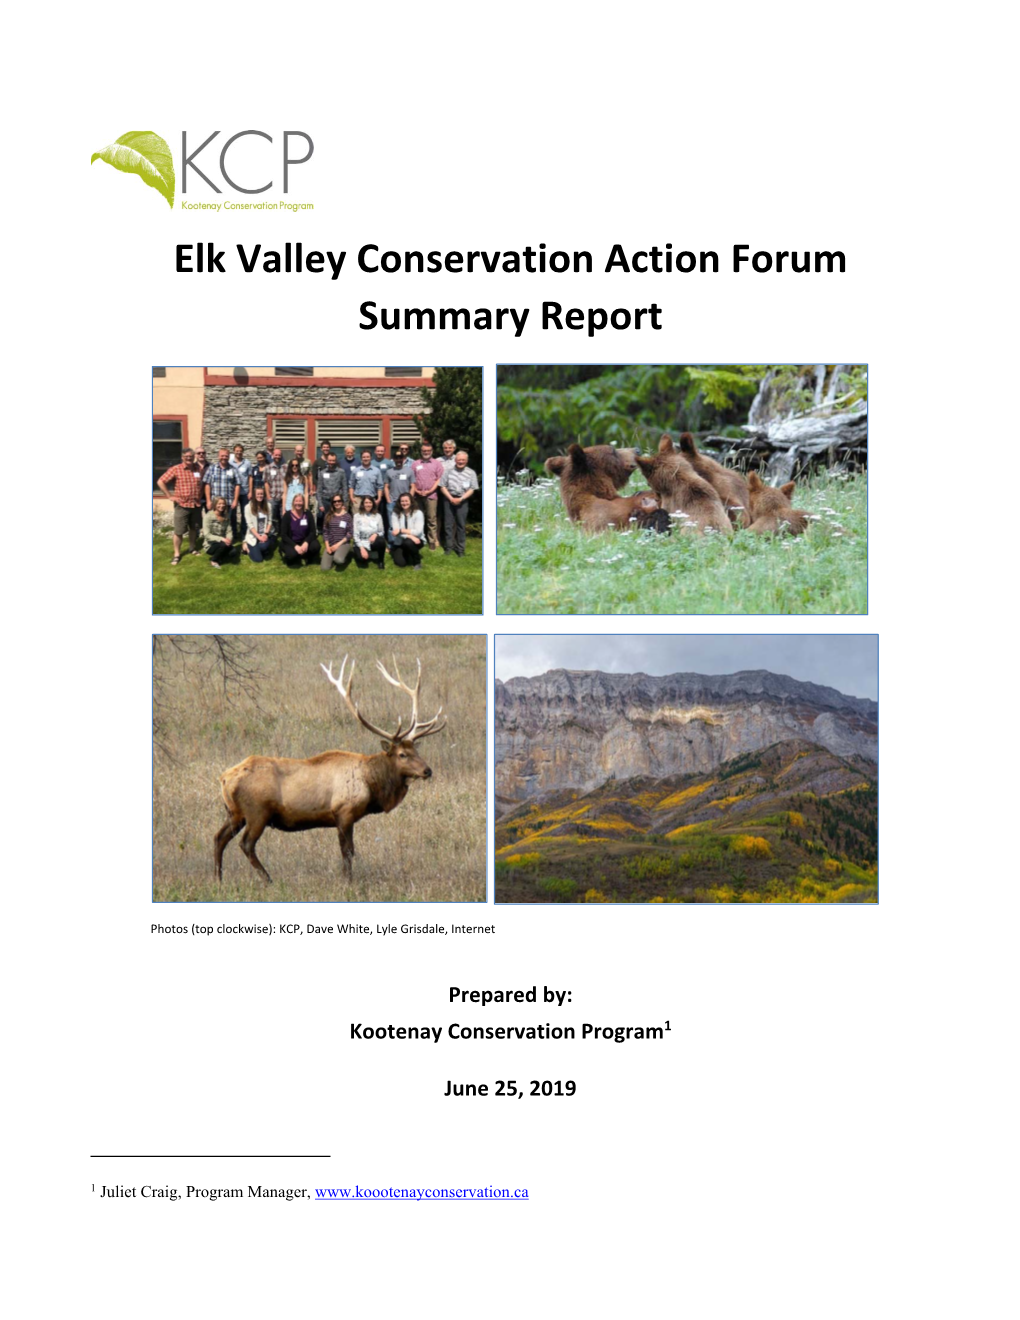 2019 Elk Valley Conservation Action Forum Summary Report